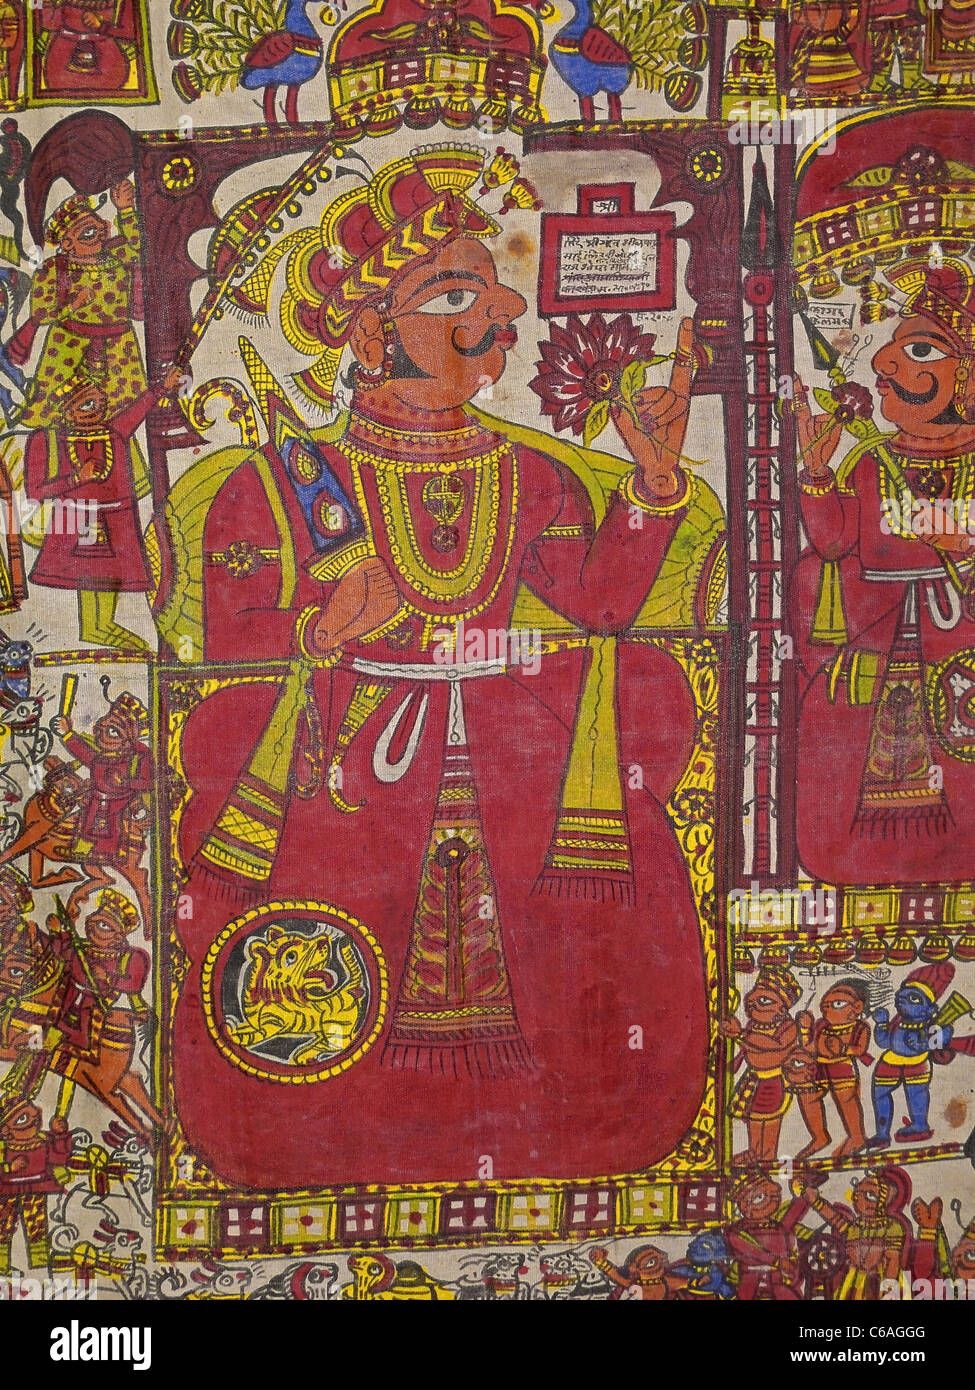 Phadas or folk paintings, Phad painting, Cloth painting displayed in a museum, Madhya pradesh, India Stock Photo